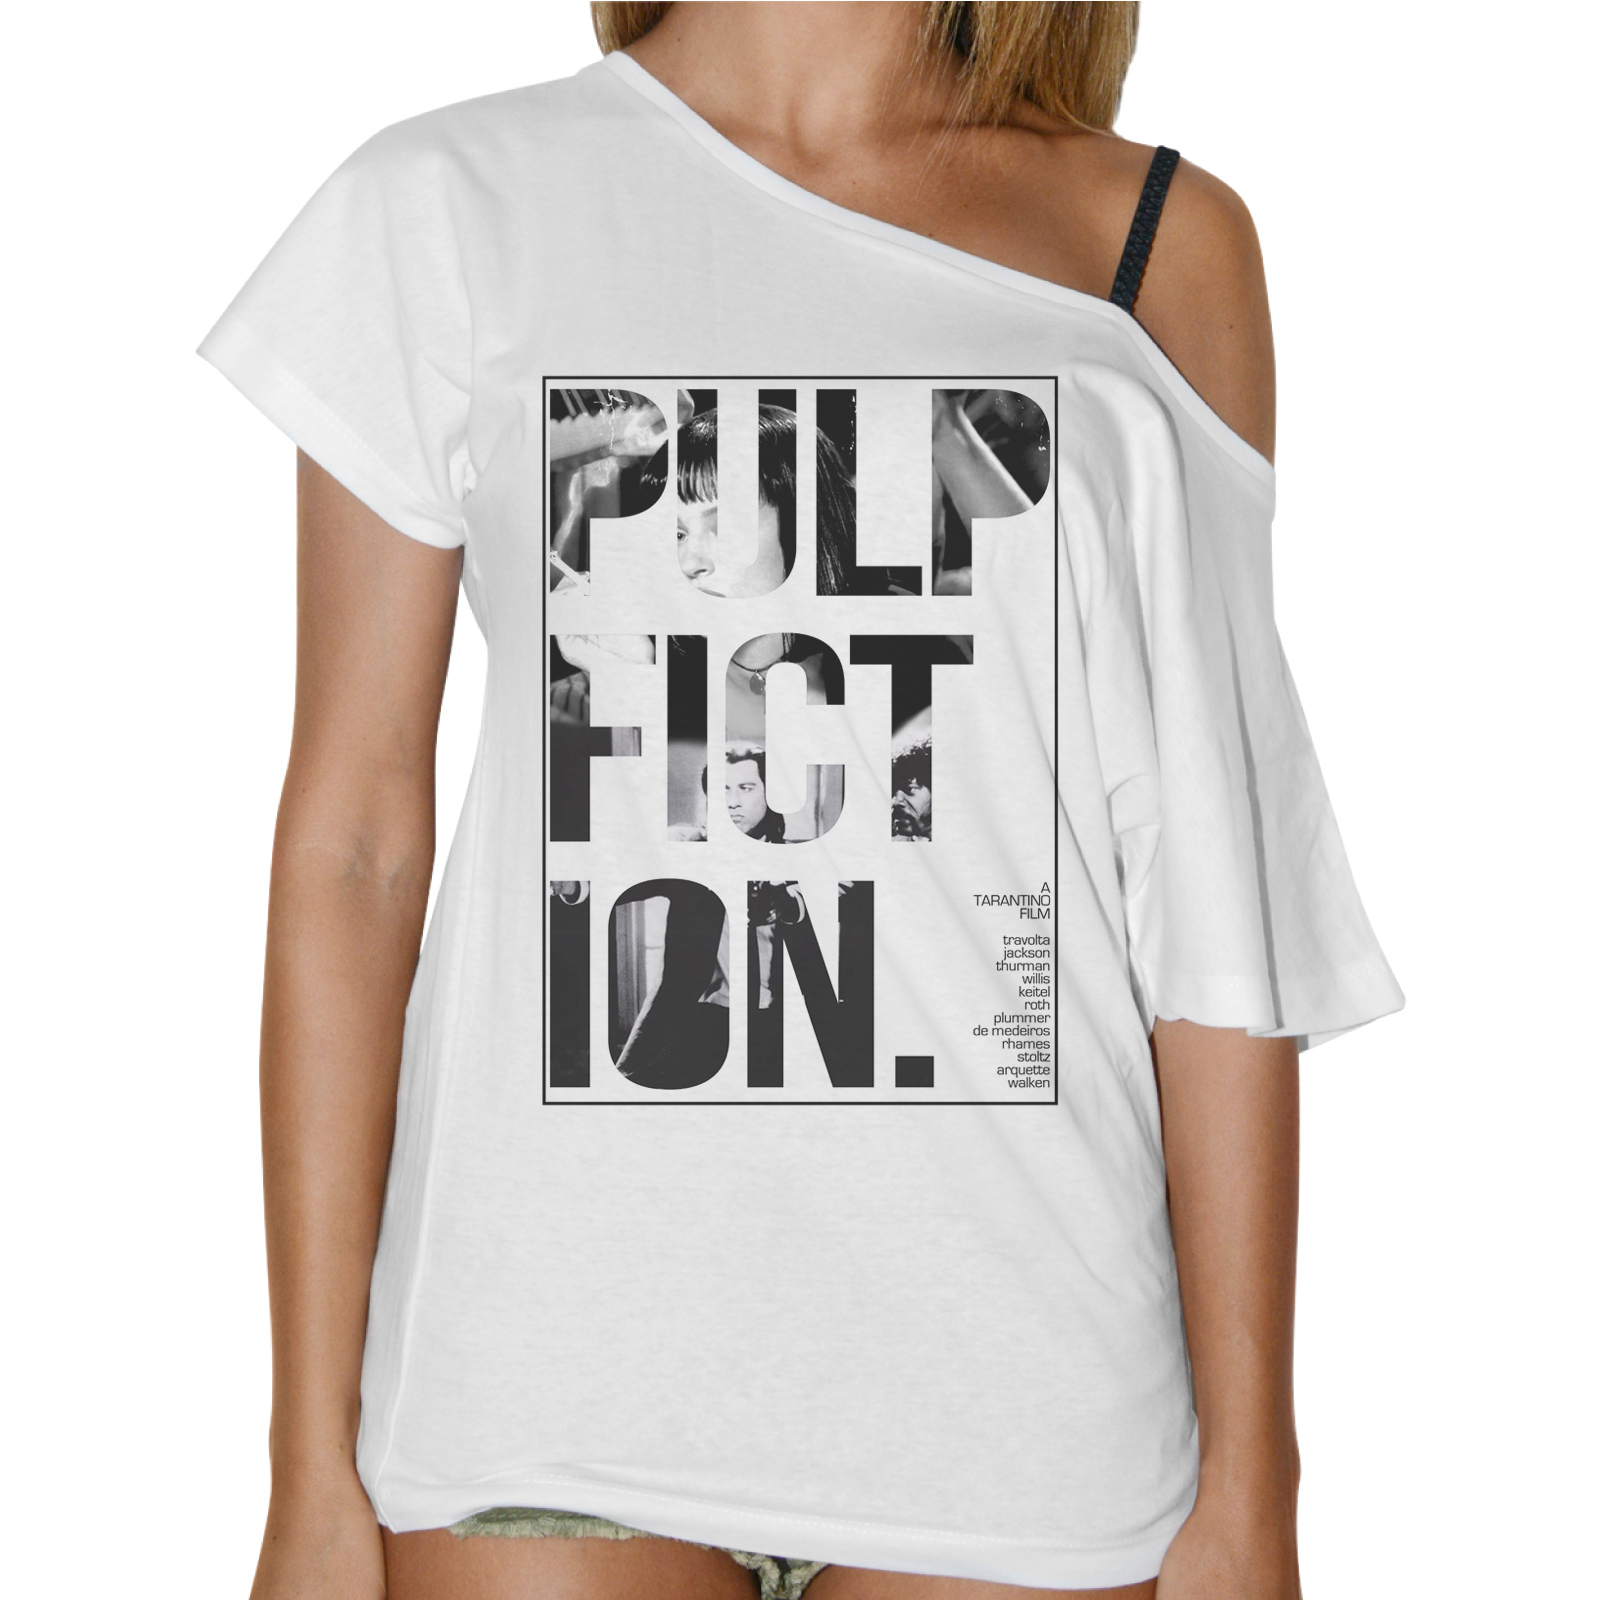 T-Shirt Donna Collo Barca PULP FICTION